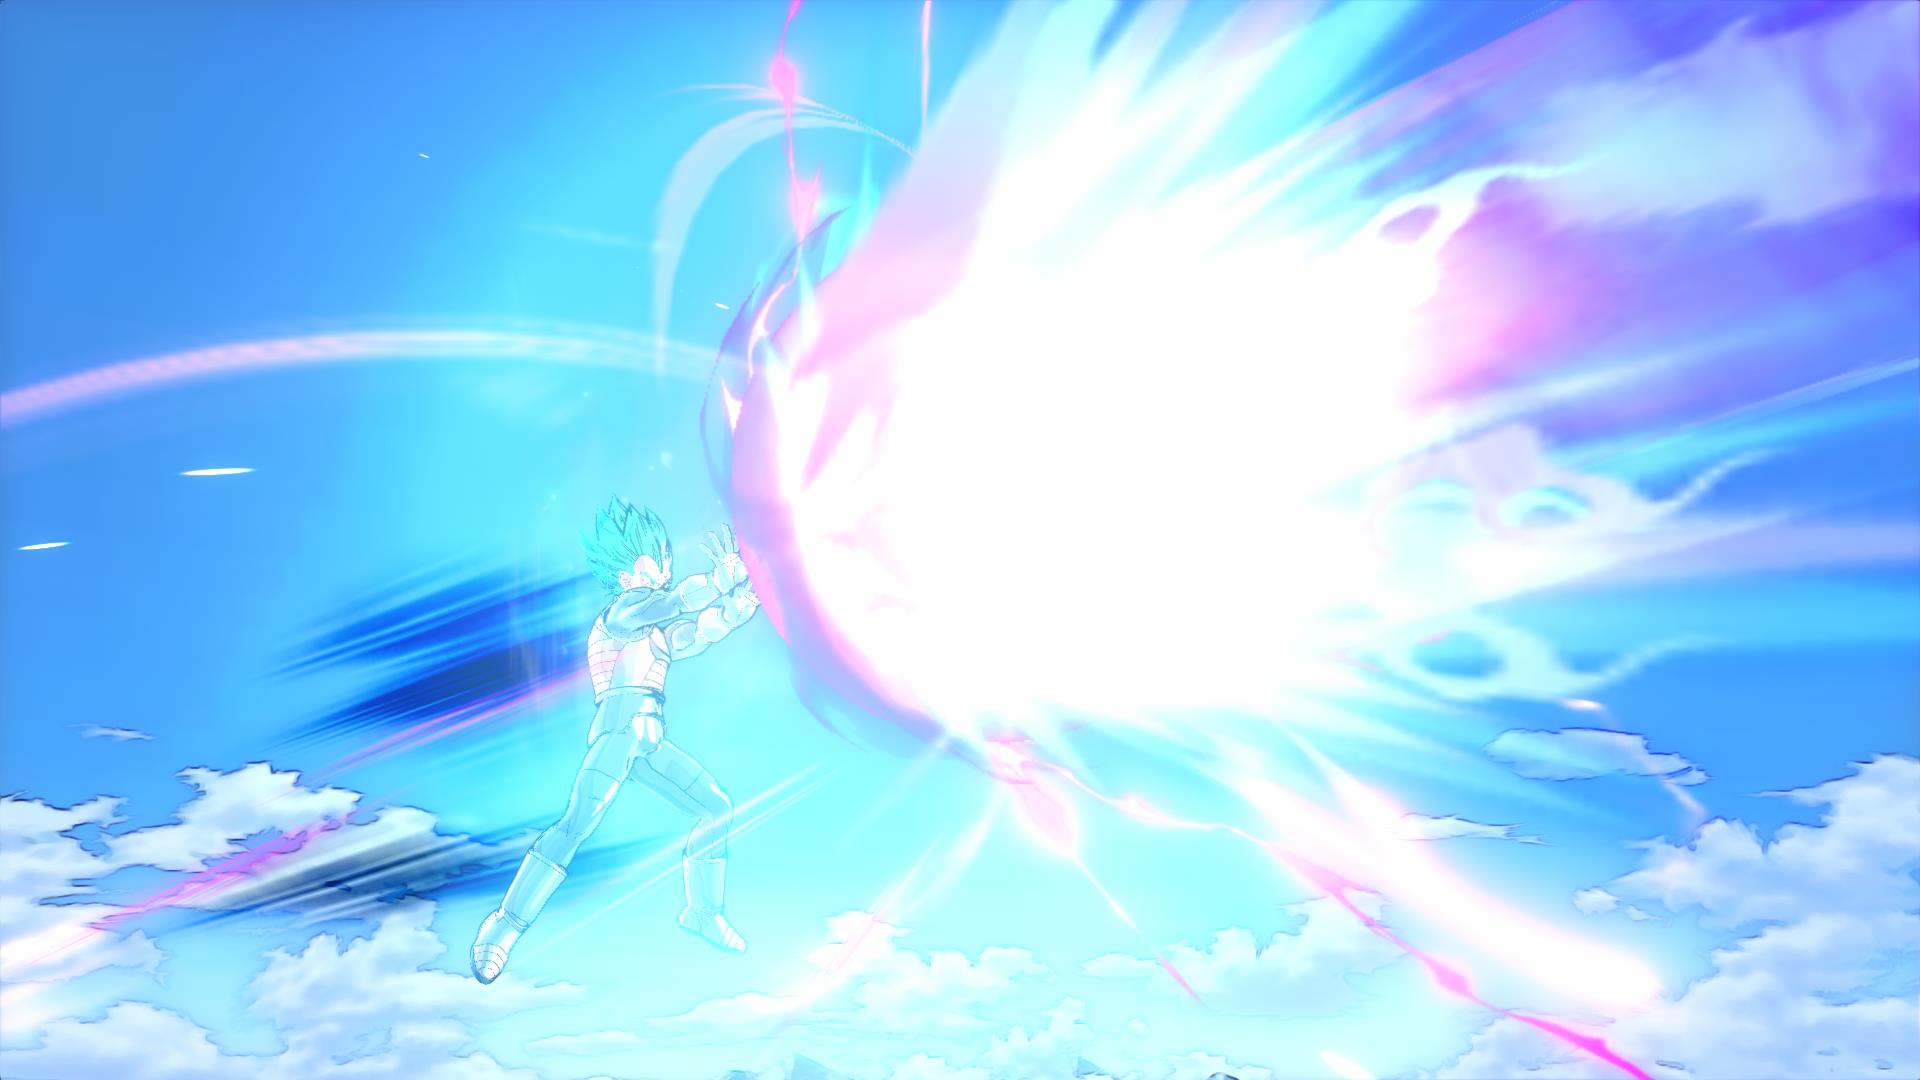 Super Saiyan God Super Saiyan Goku and Vegeta DLC for Dragon Ball Xenoverse  coming soon - Neoseeker